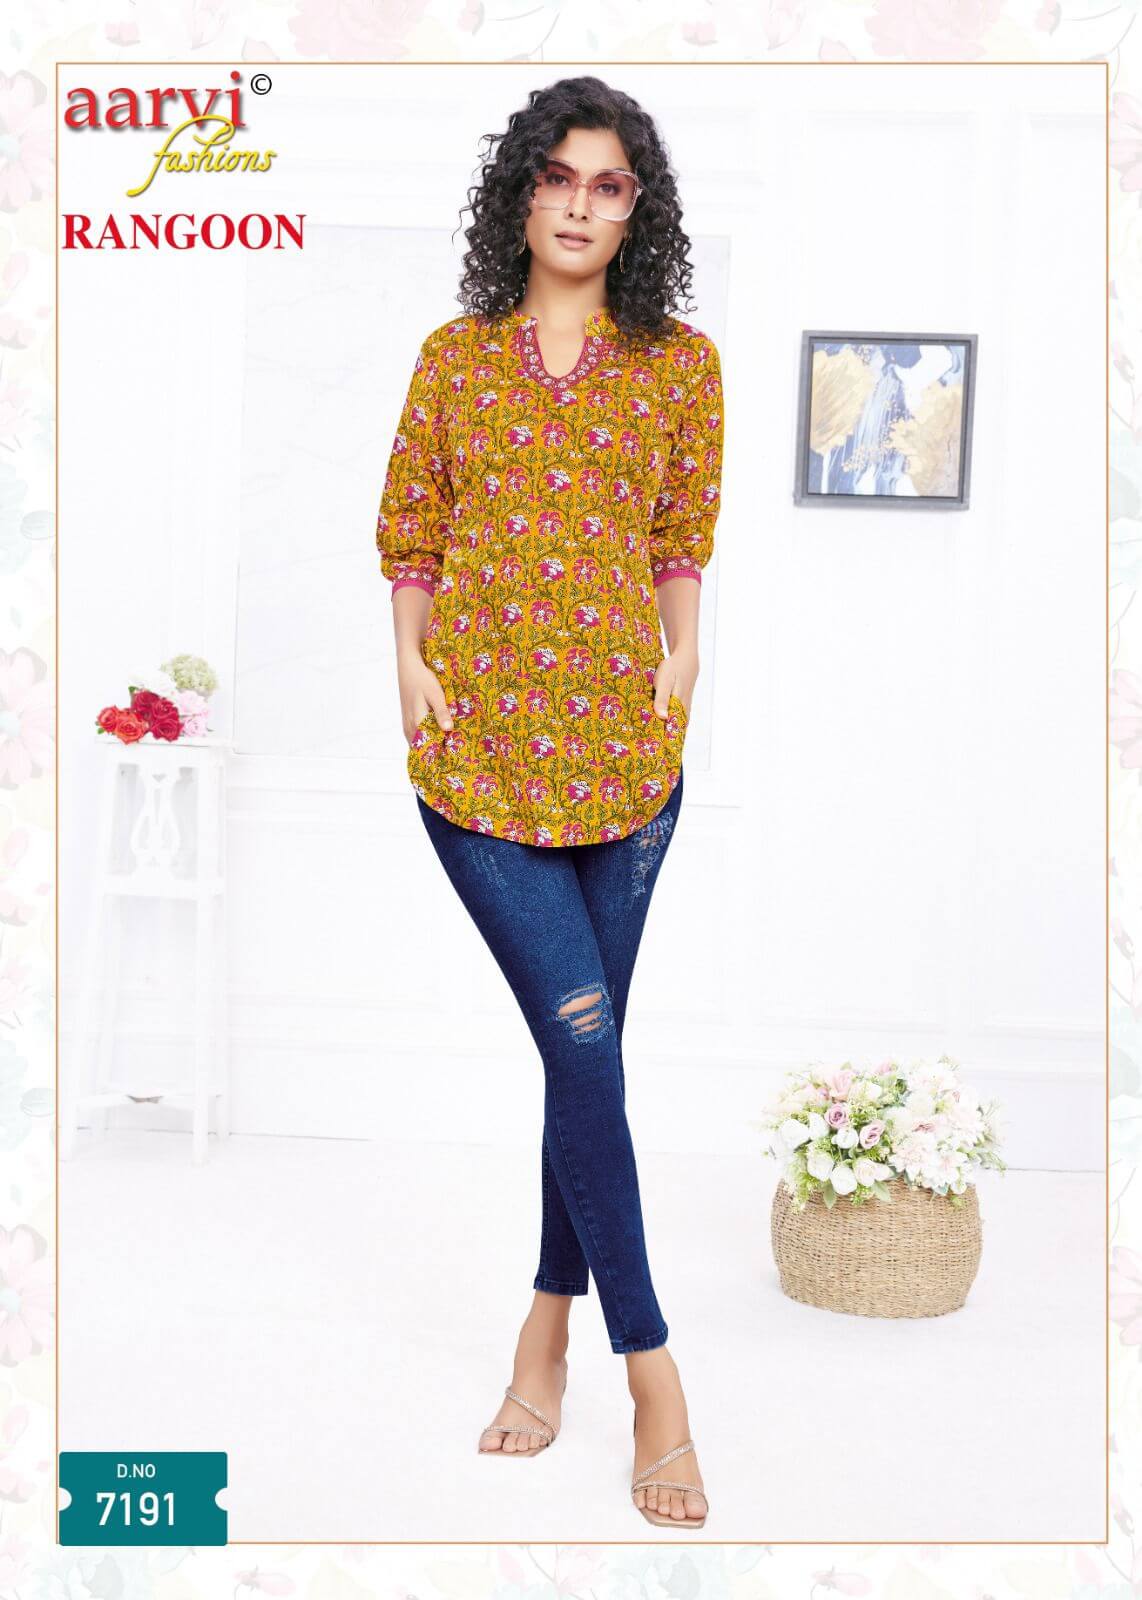 Aarvi Fashions Rangoon Ladies Short Tops Catalog collection 11